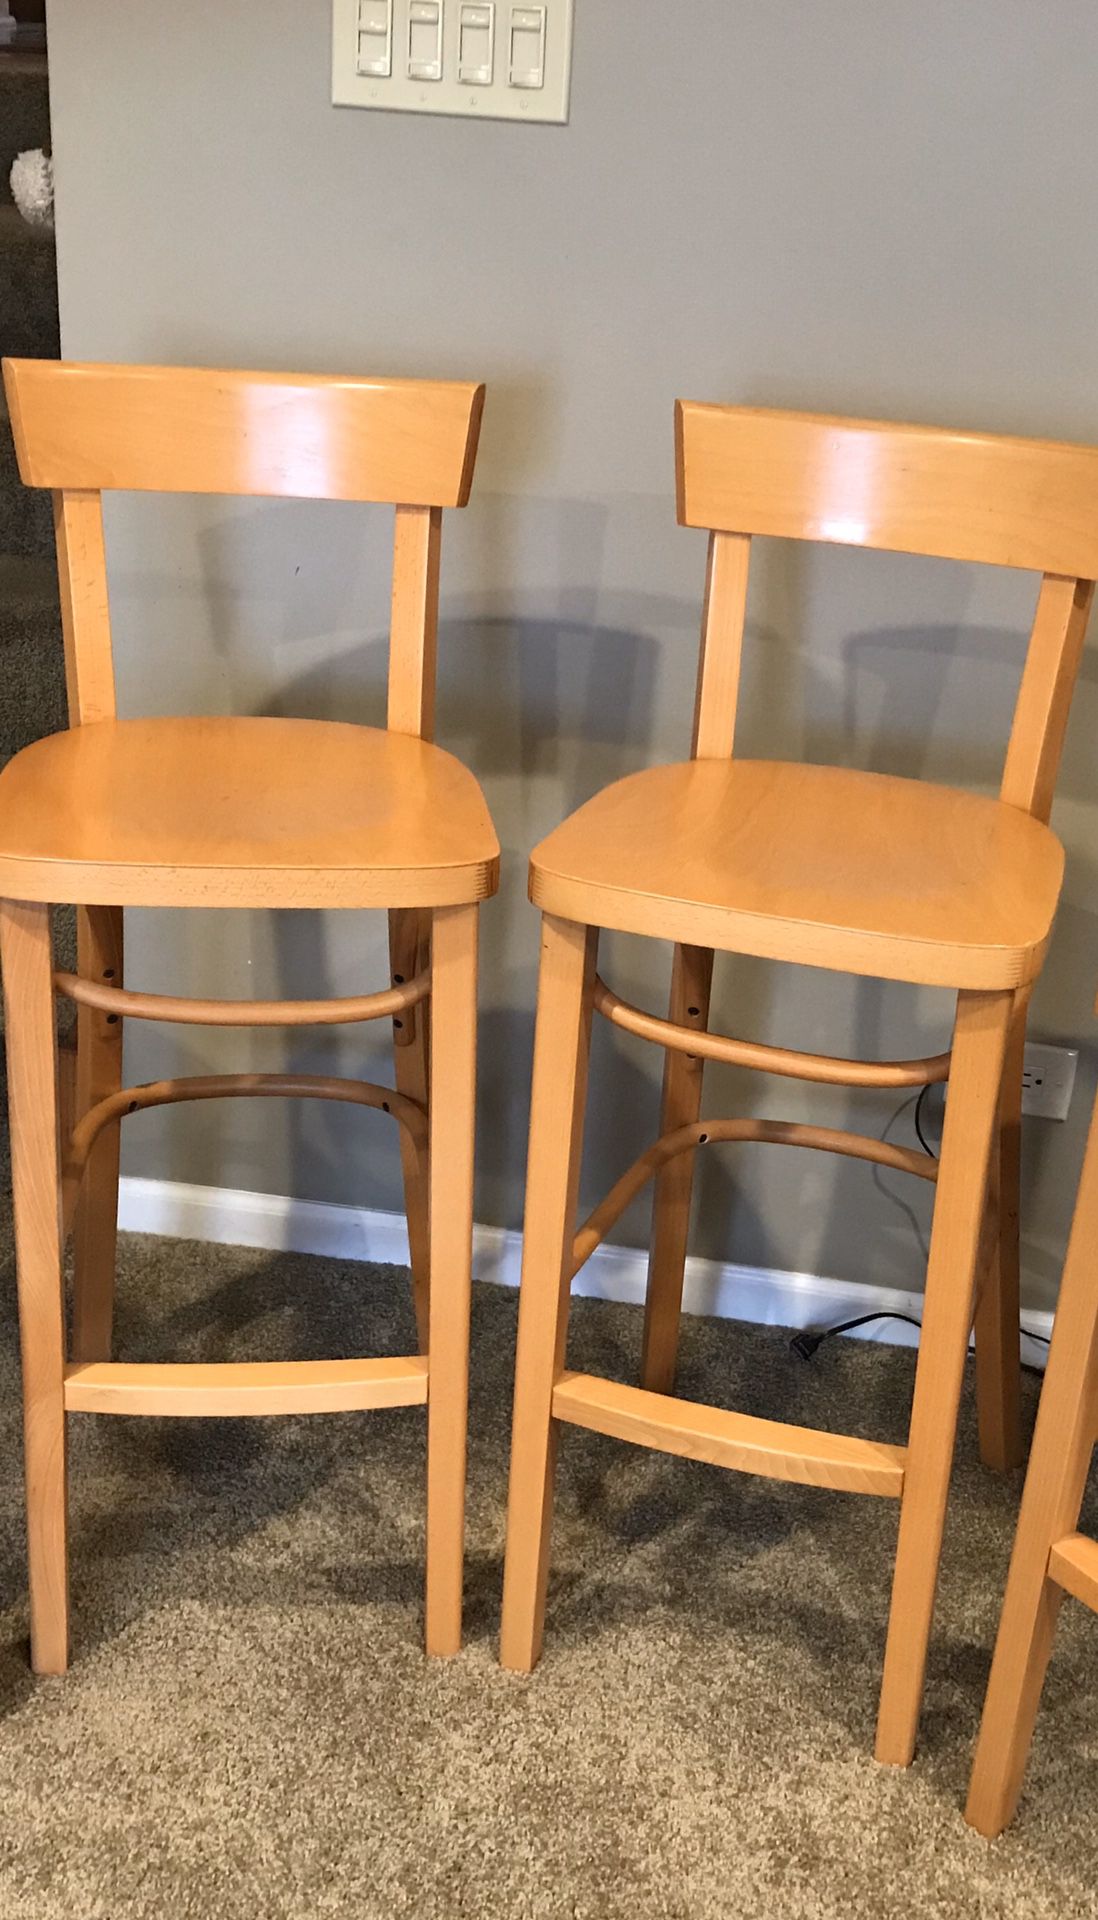 IKEA bar stools (2)